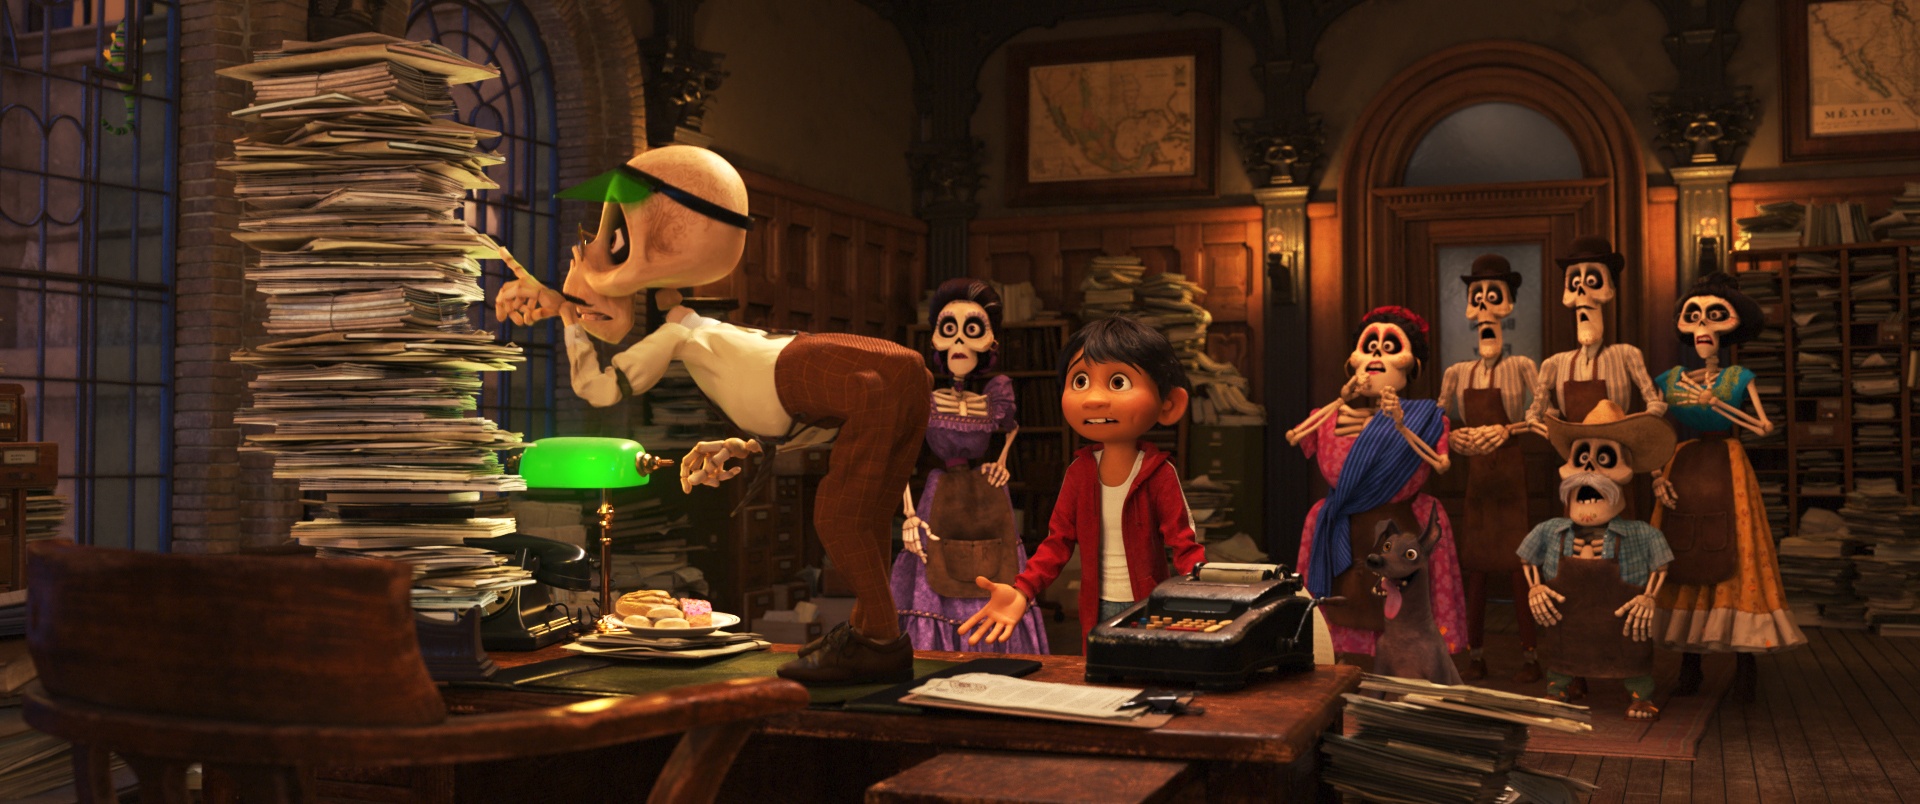 New Trailer Debuts for Disney-Pixar’s Coco!